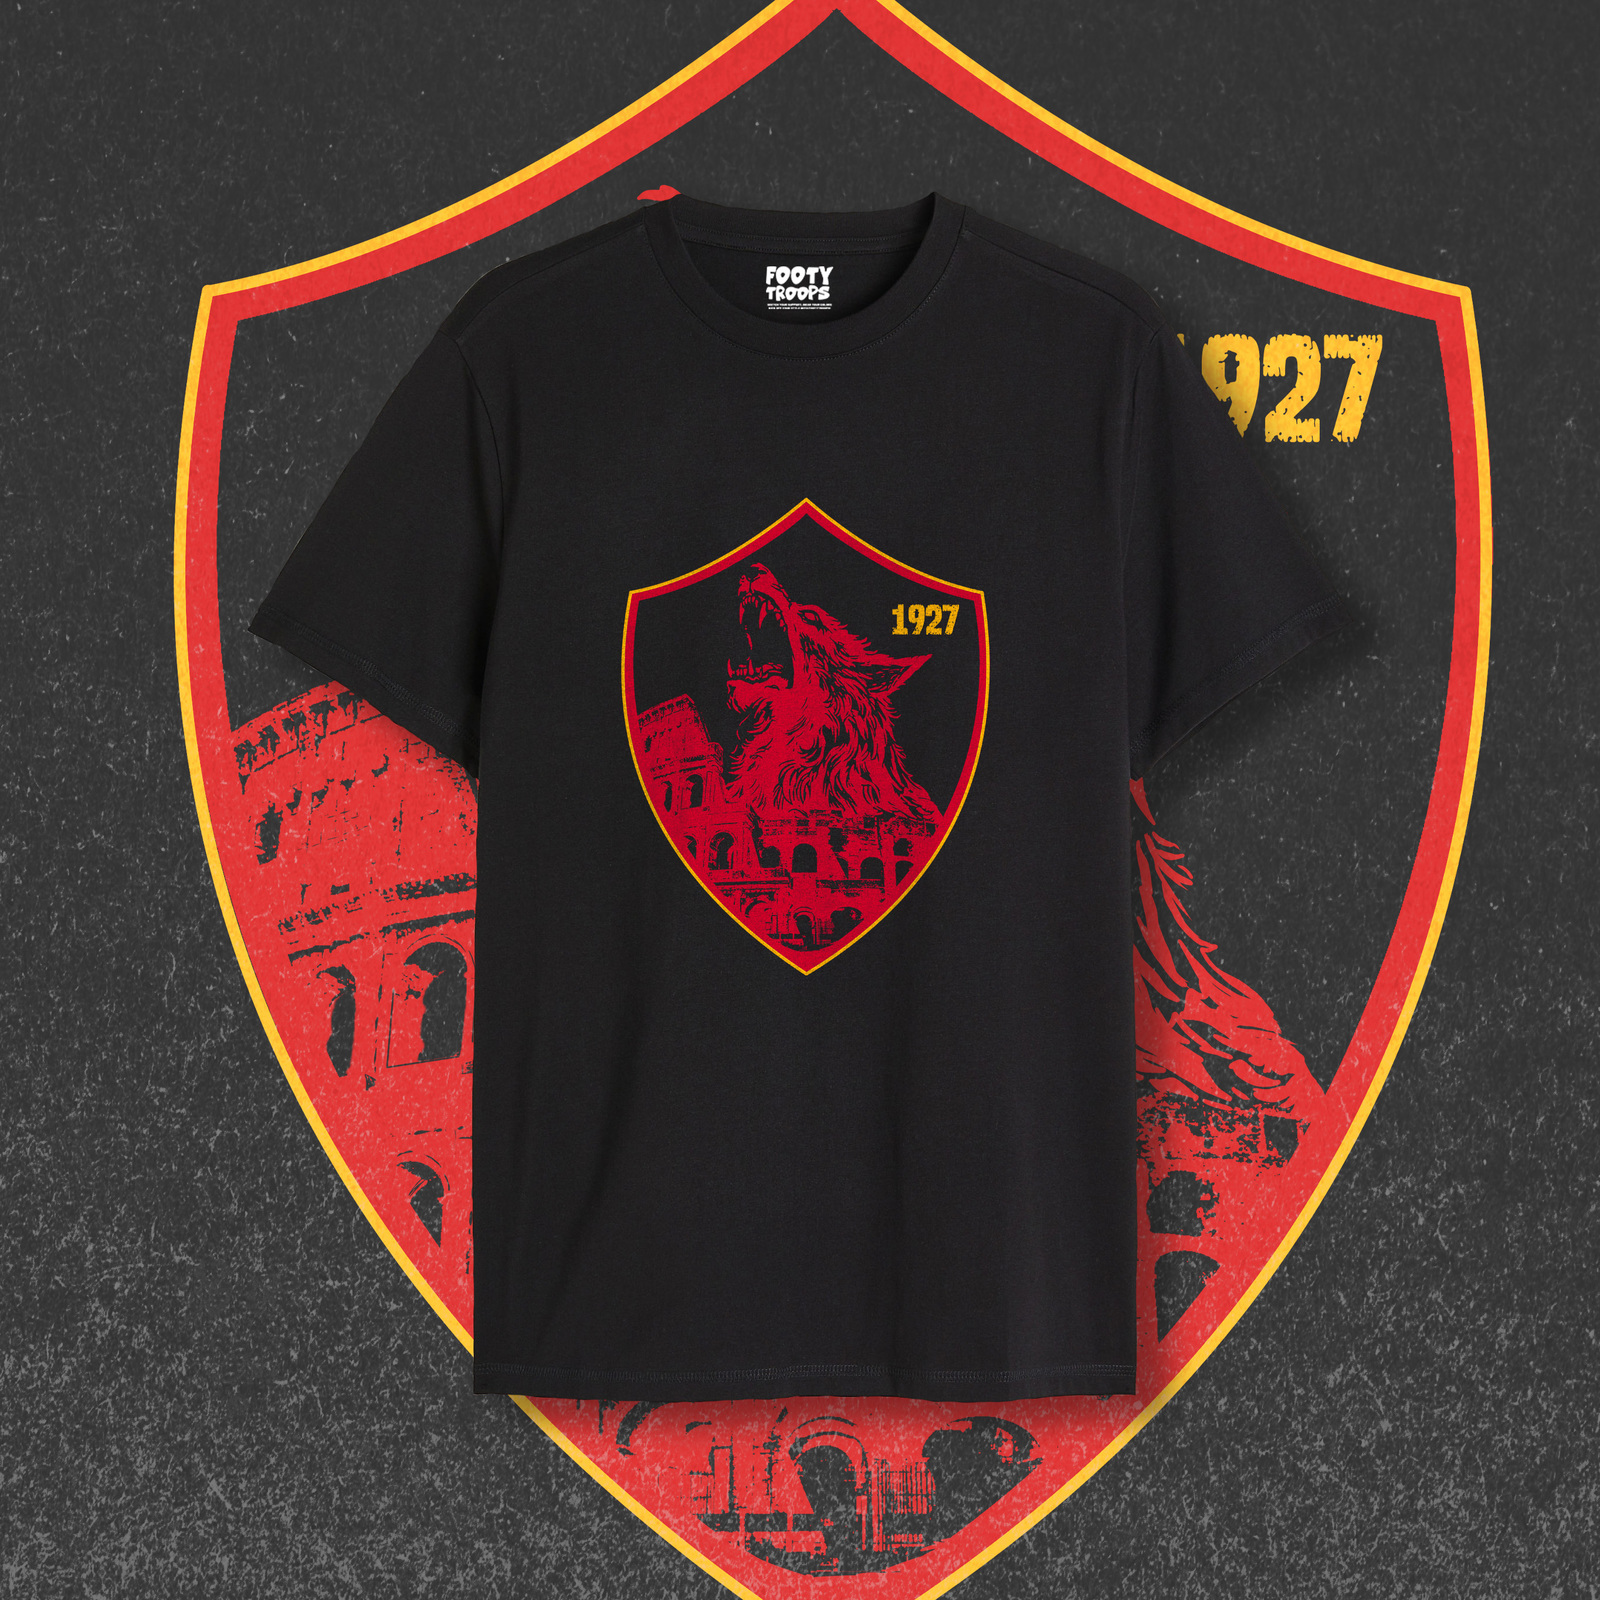 LA LUPA As Roma T Shirt/Roma /football Shirt/Calcio Italian footballer T shirt  - $19.84 - $22.23